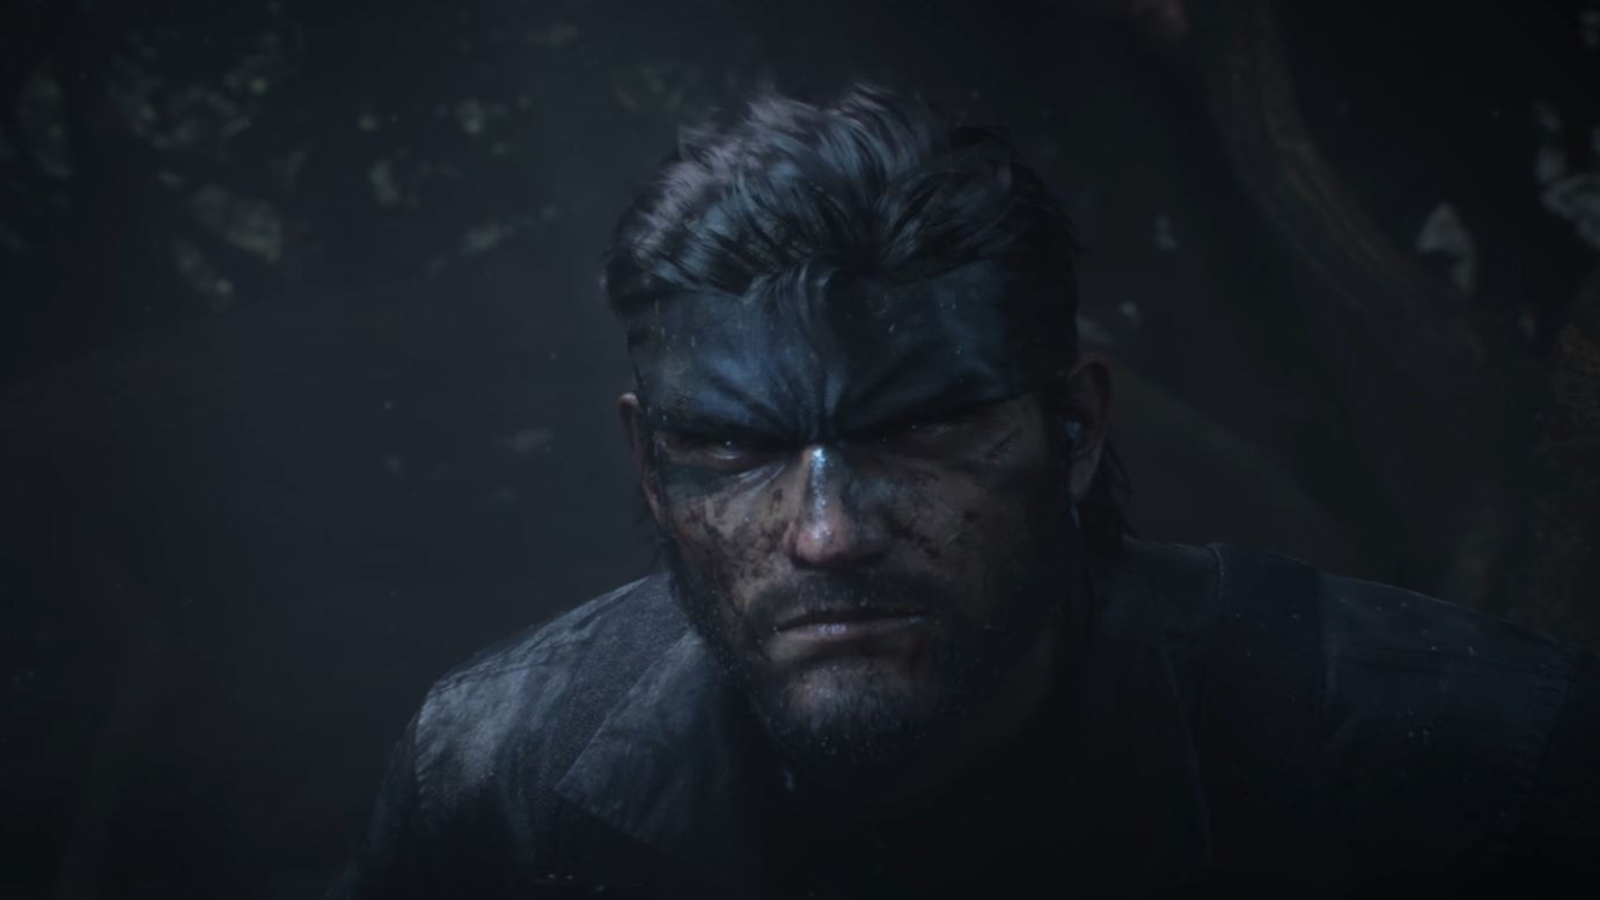 Walkthrough - Metal Gear 2: Solid Snake Guide - IGN